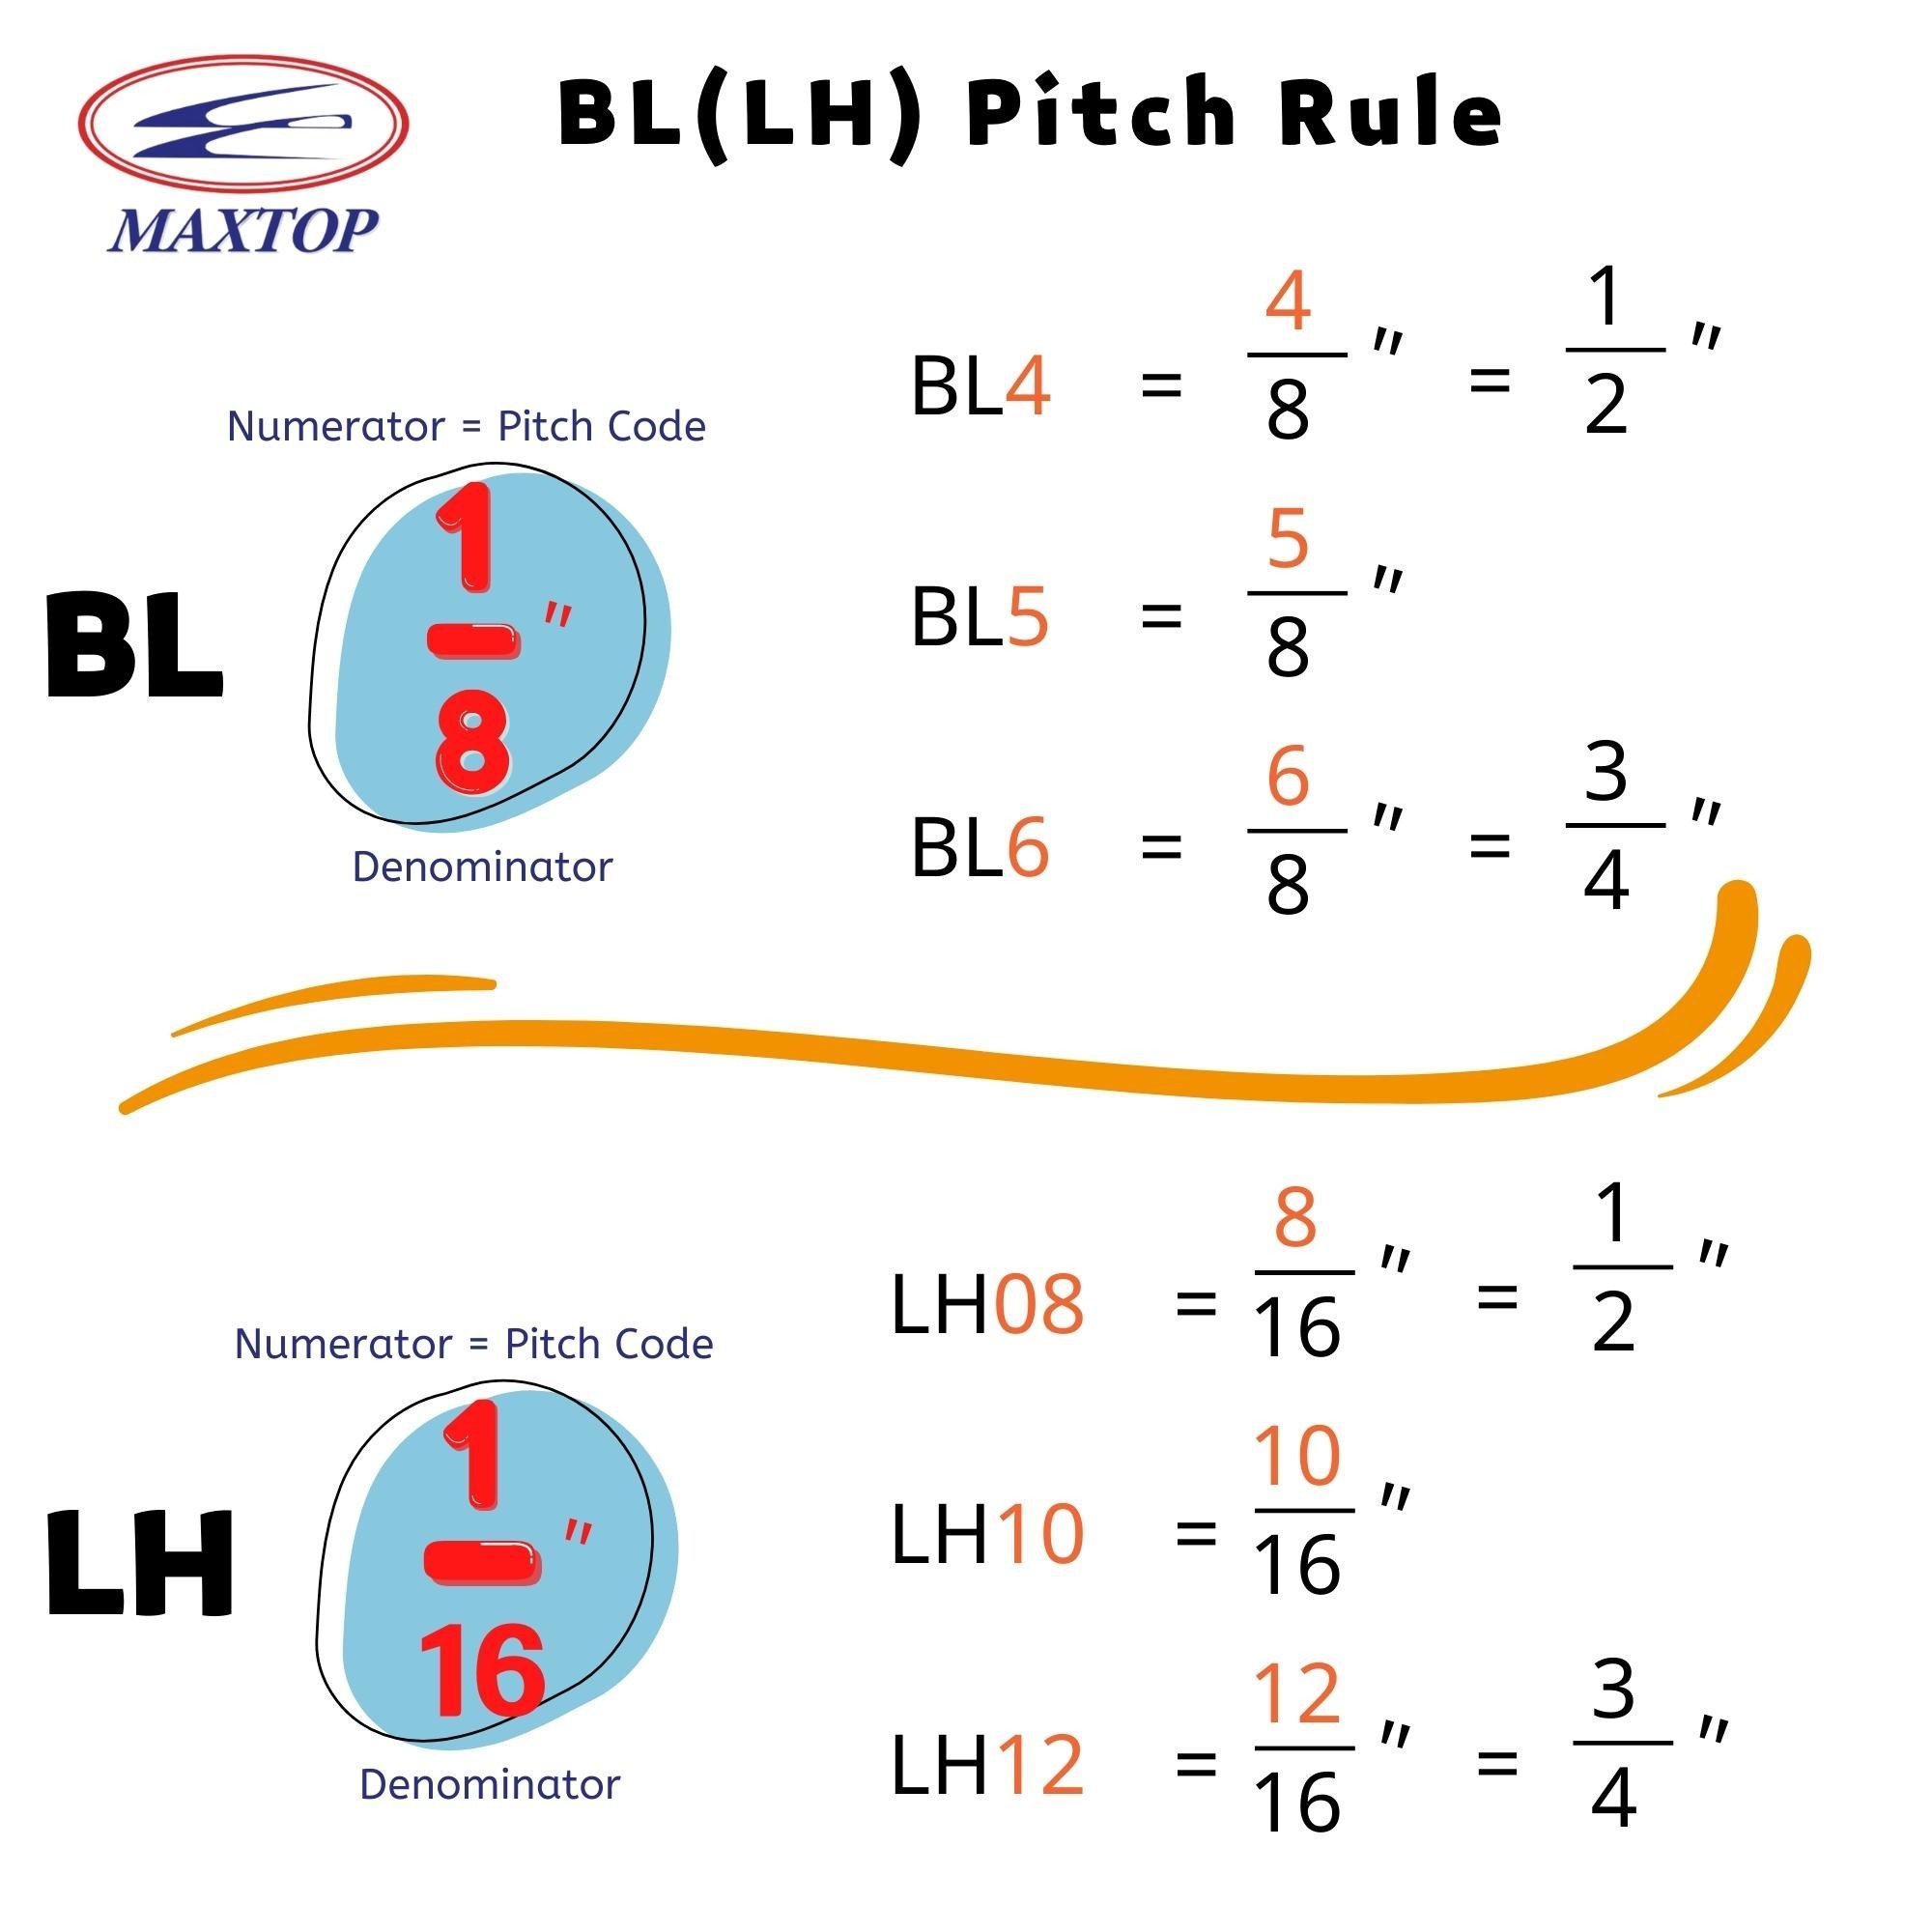 BL(LH) Pitch Rule